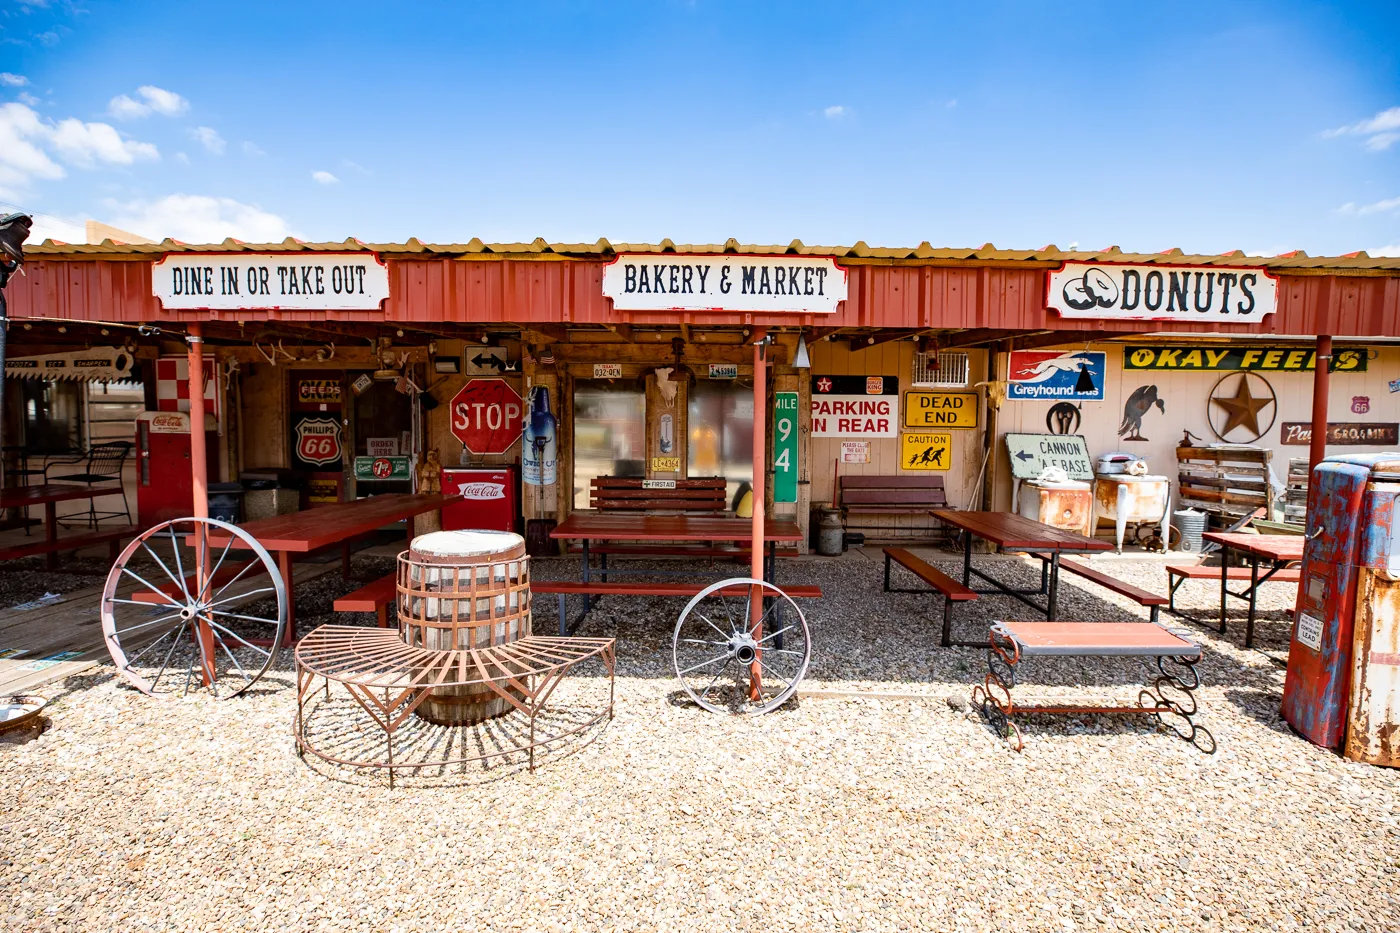 Tucumcari Ranch Supply & Watson's BBQ in New Mexico